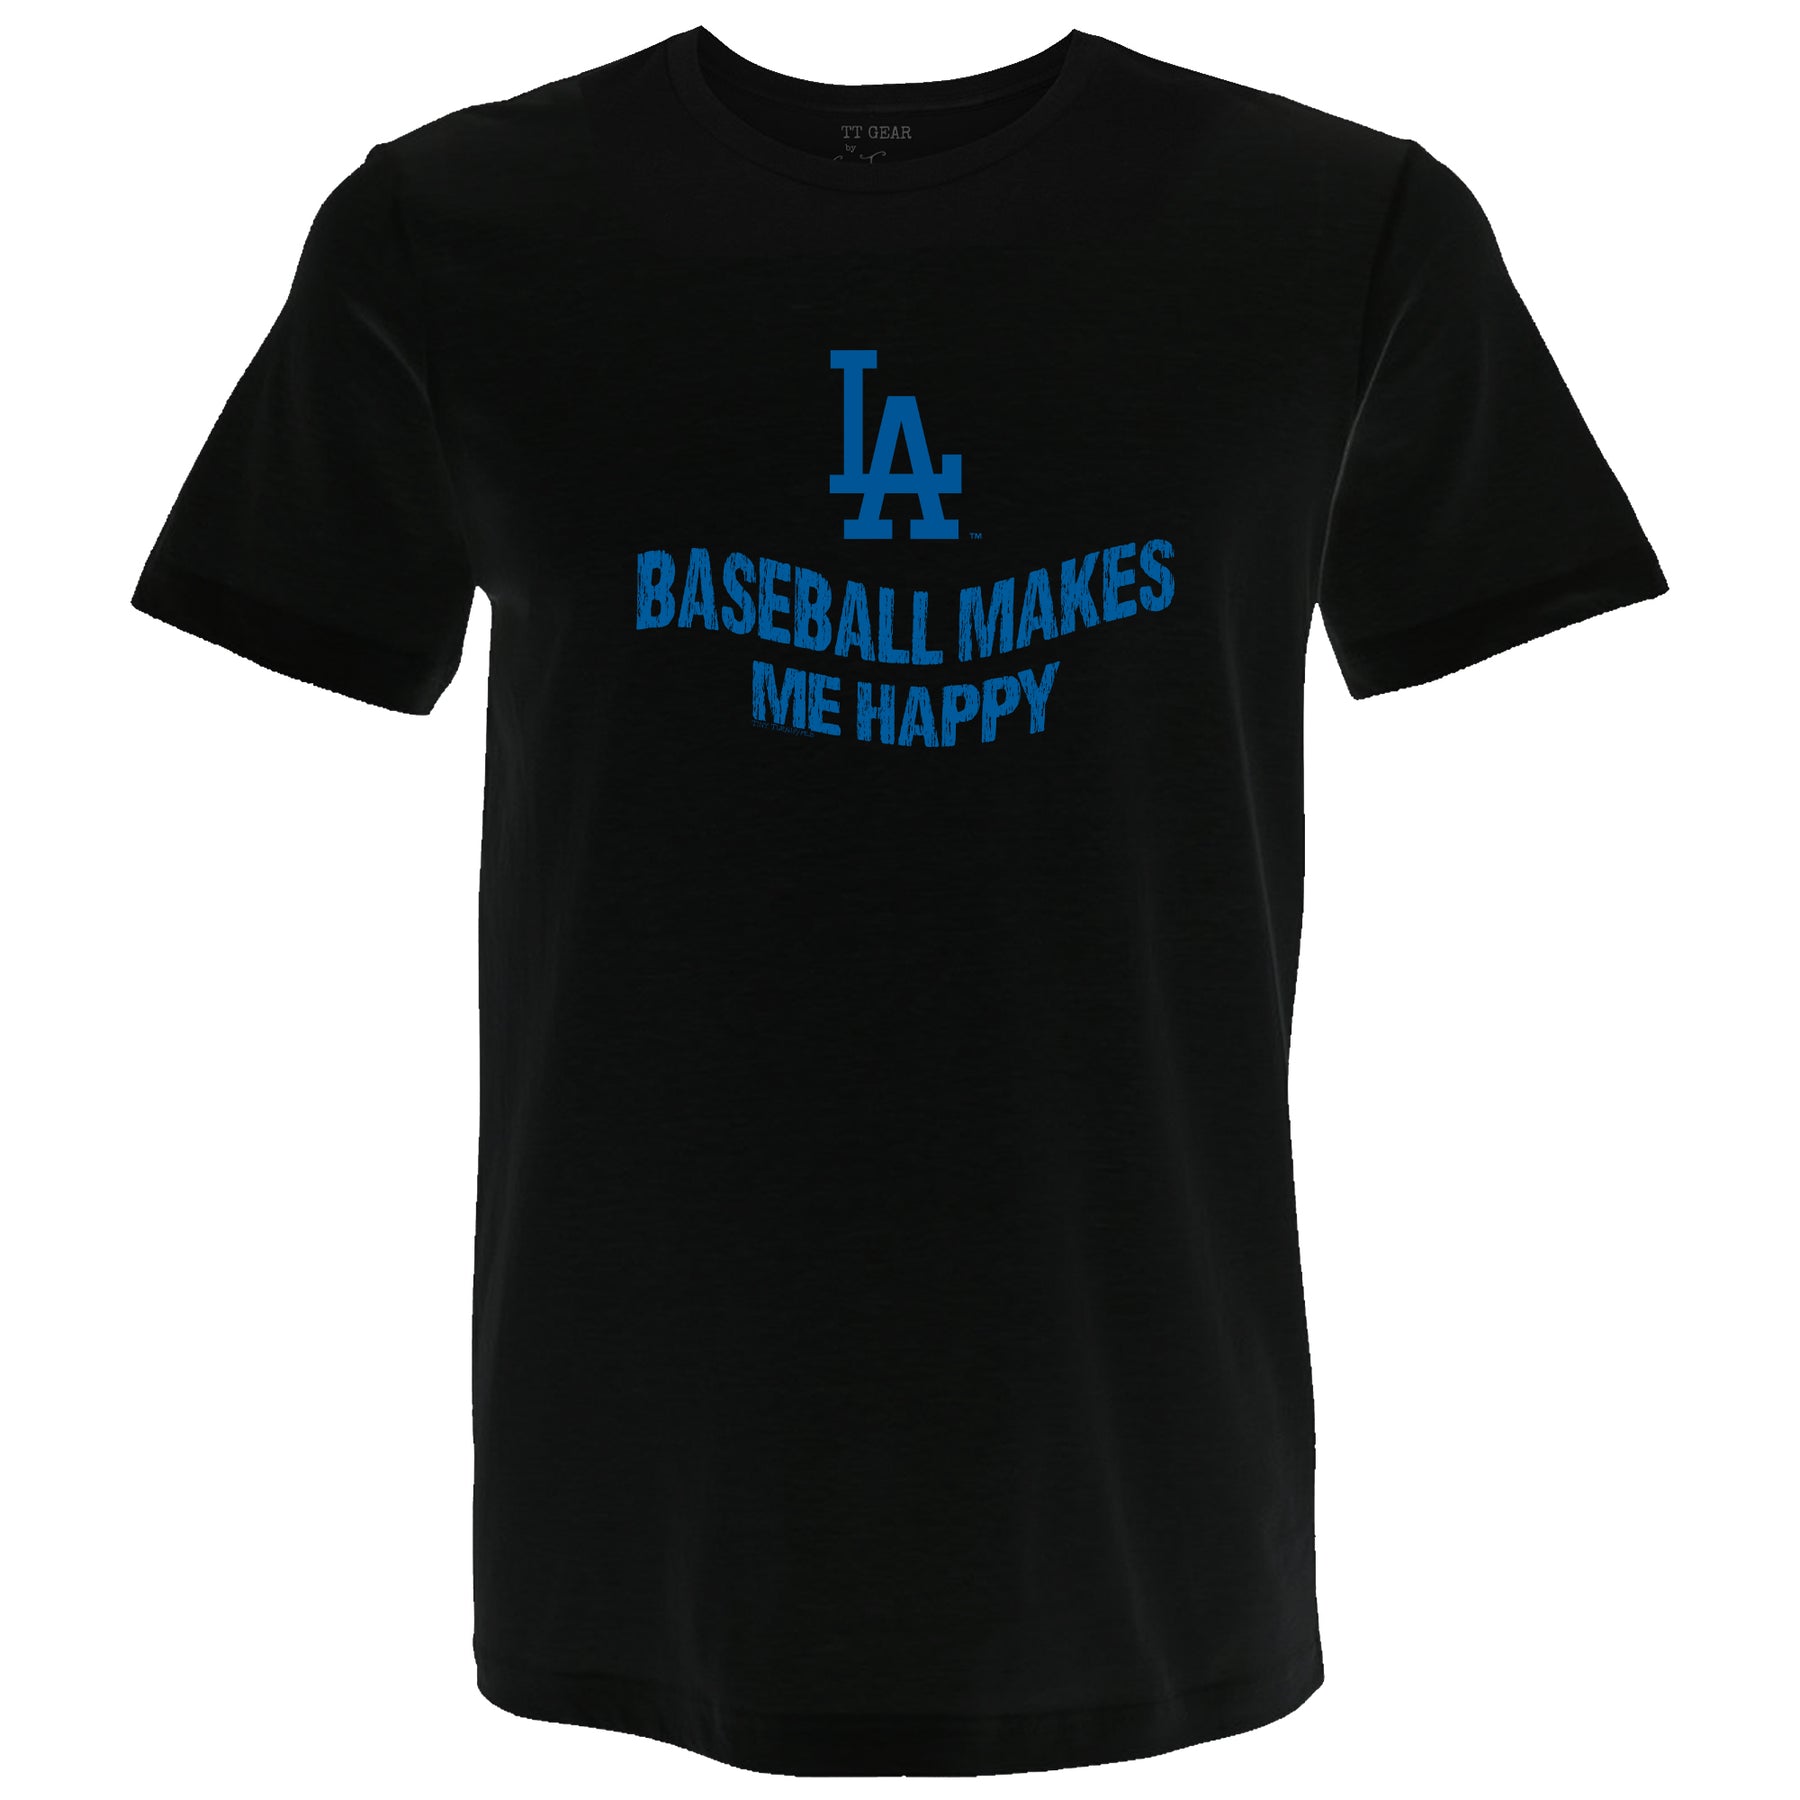 LA Dodgers MLB Pastel Pink Oversized T-Shirt